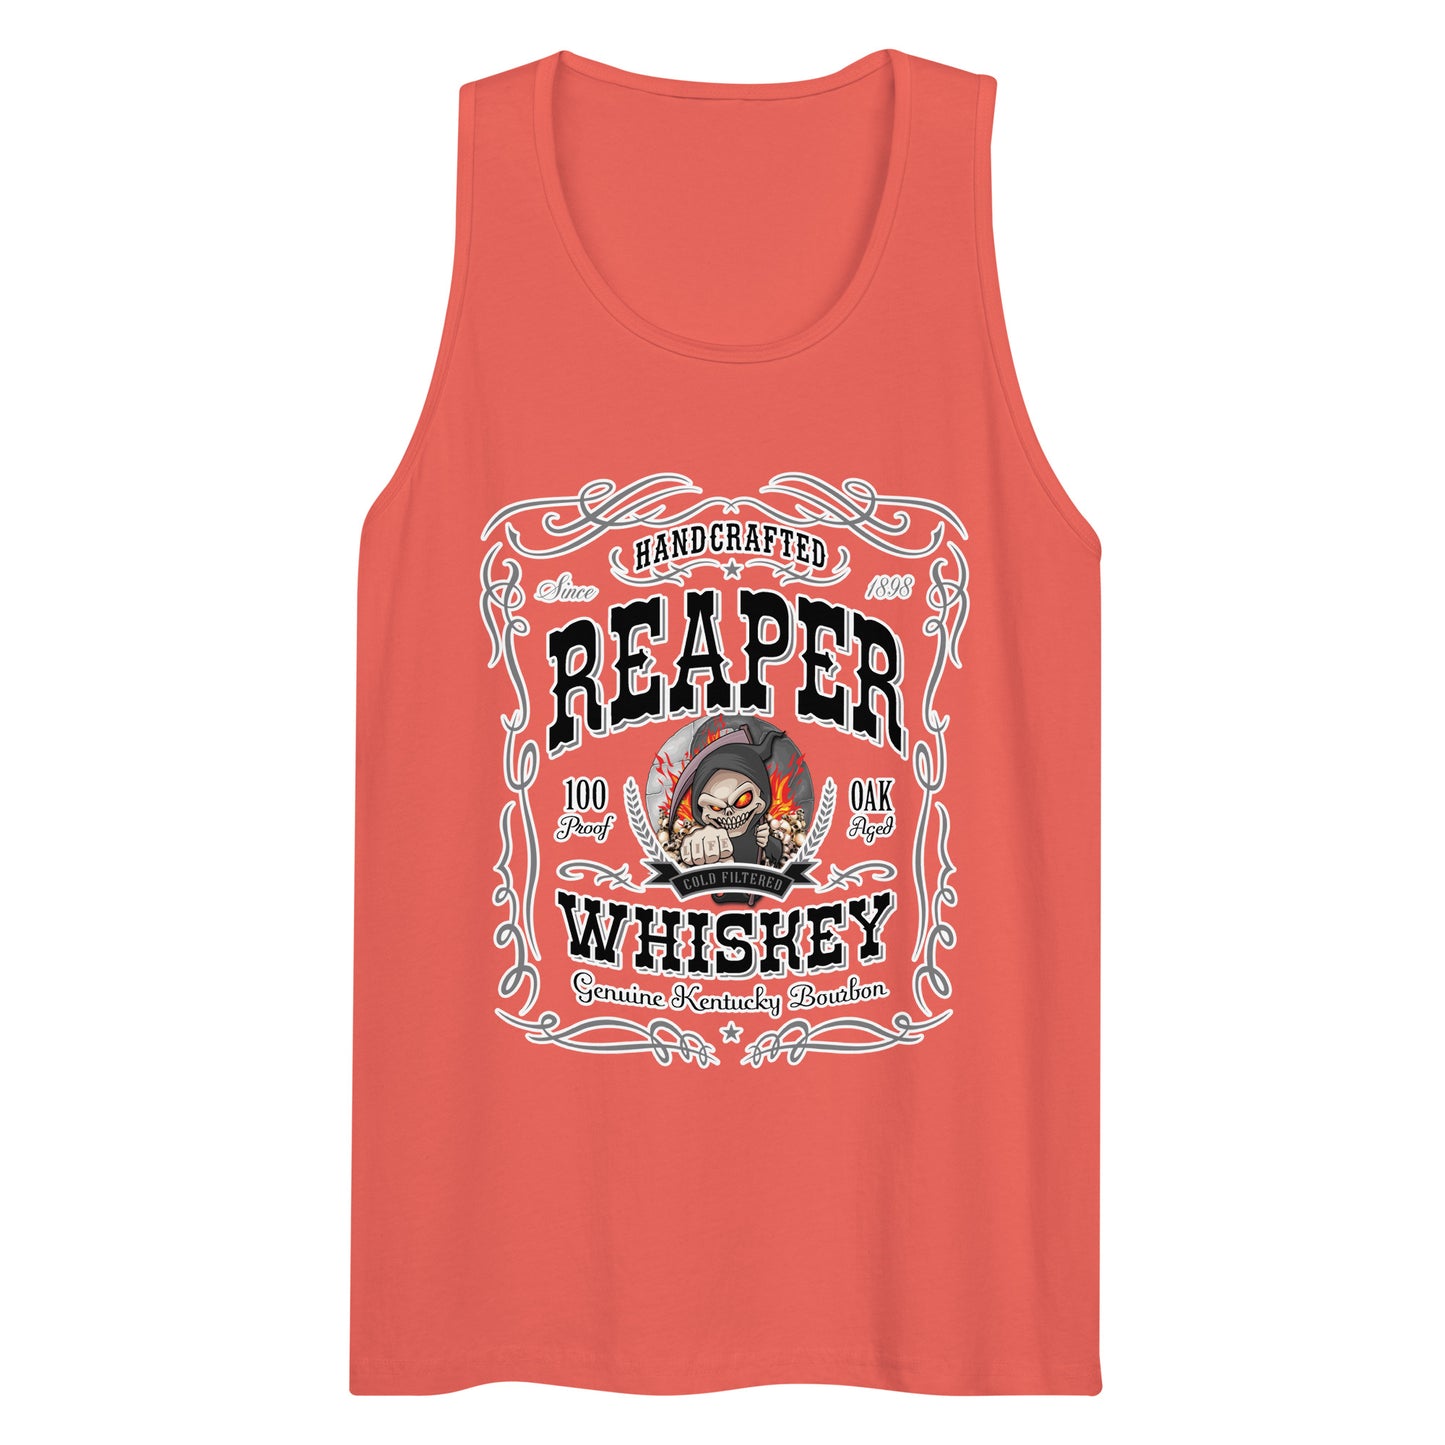 Reaper Whiskey Tank Top